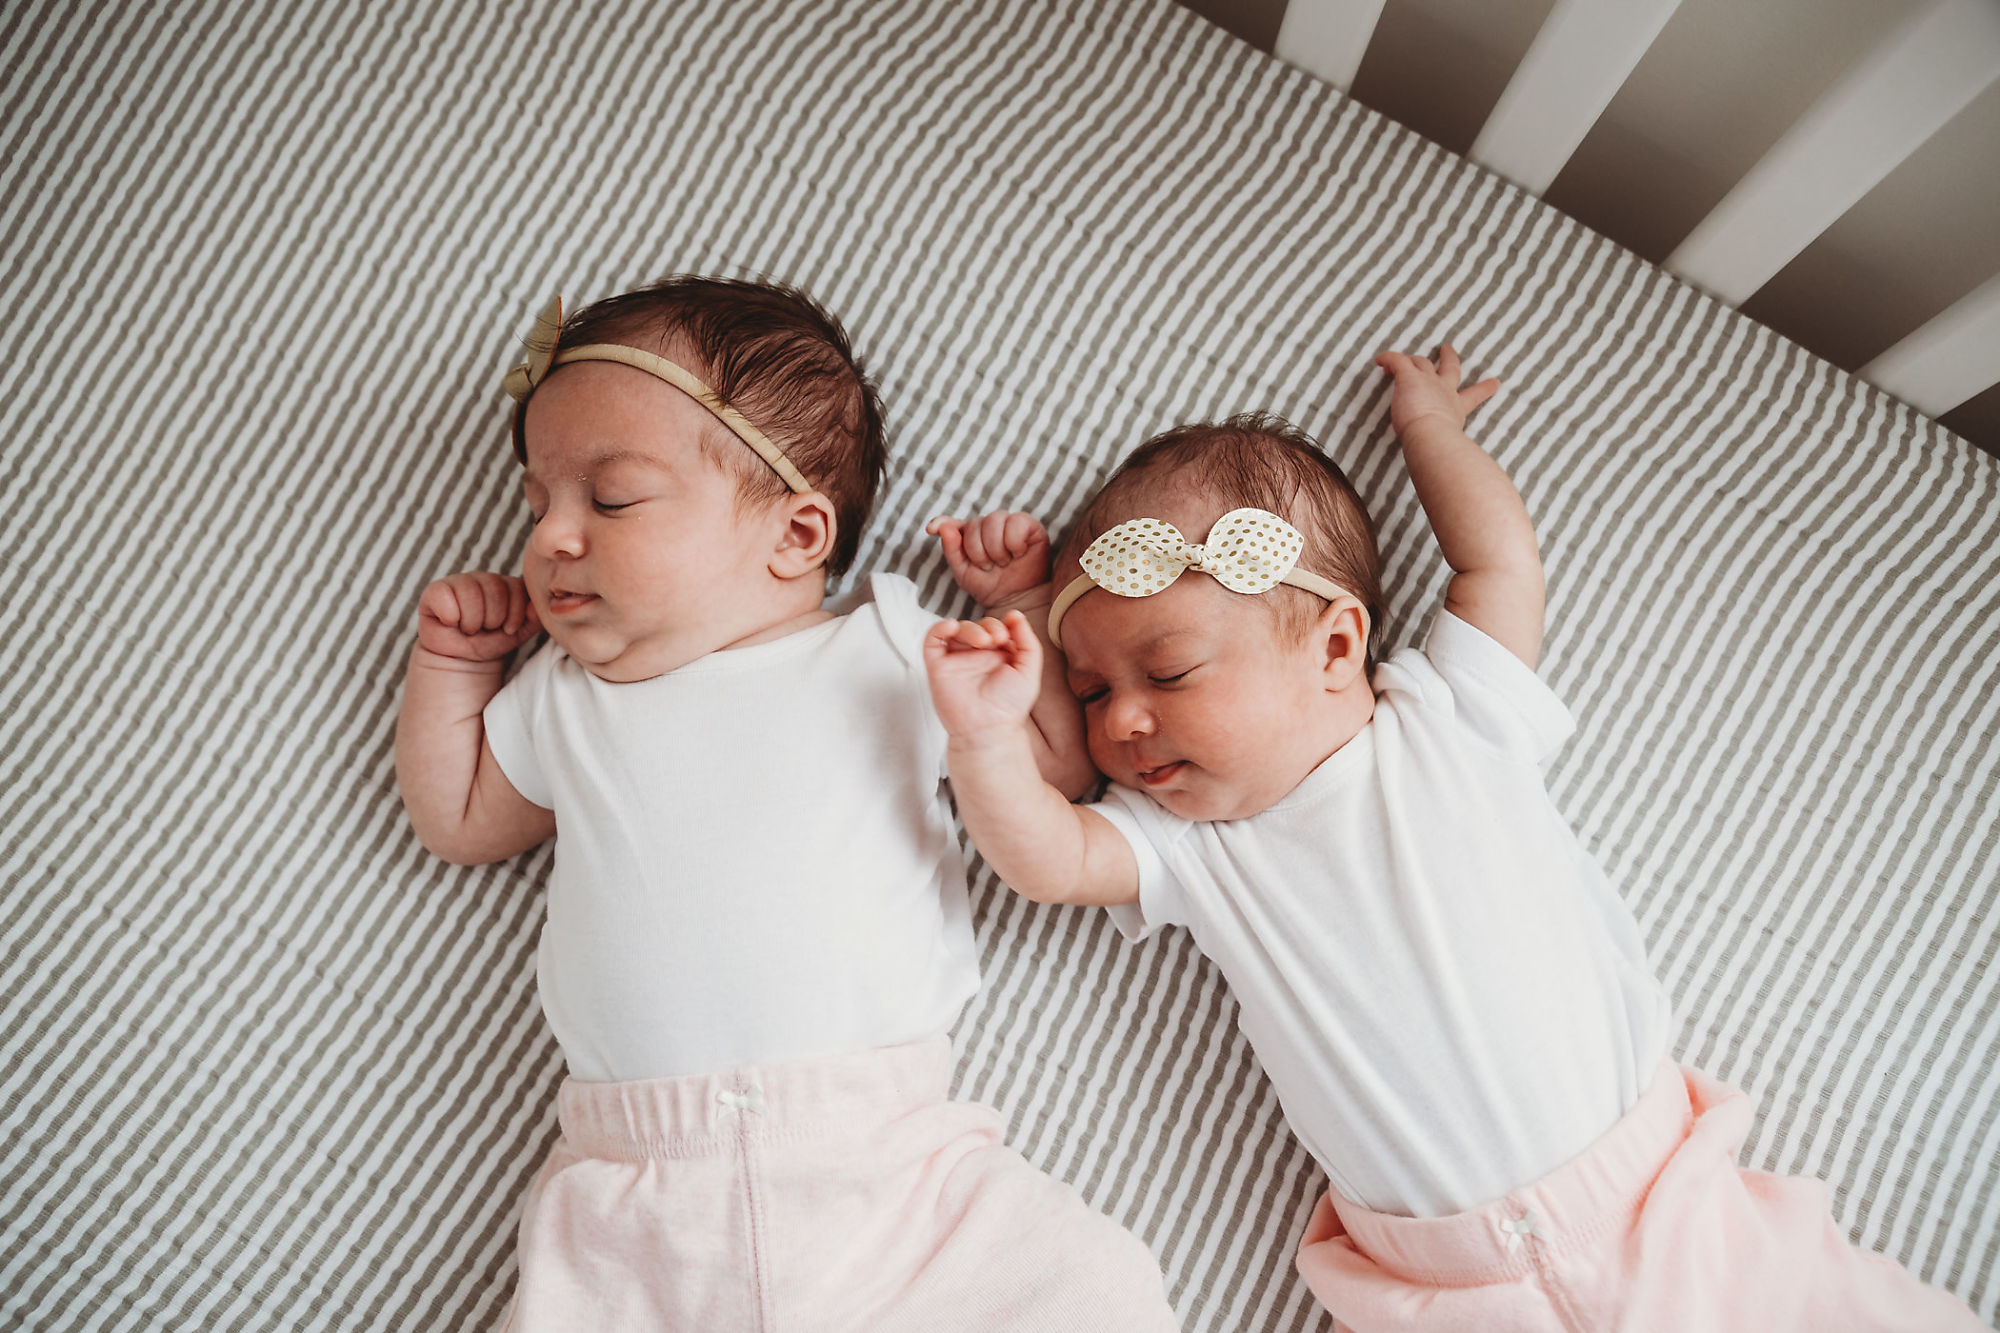 Lifestyle Hamilton Newborn Photographer Jennifer Blaak captures sleeping twins in their crib at home in Hamilton.